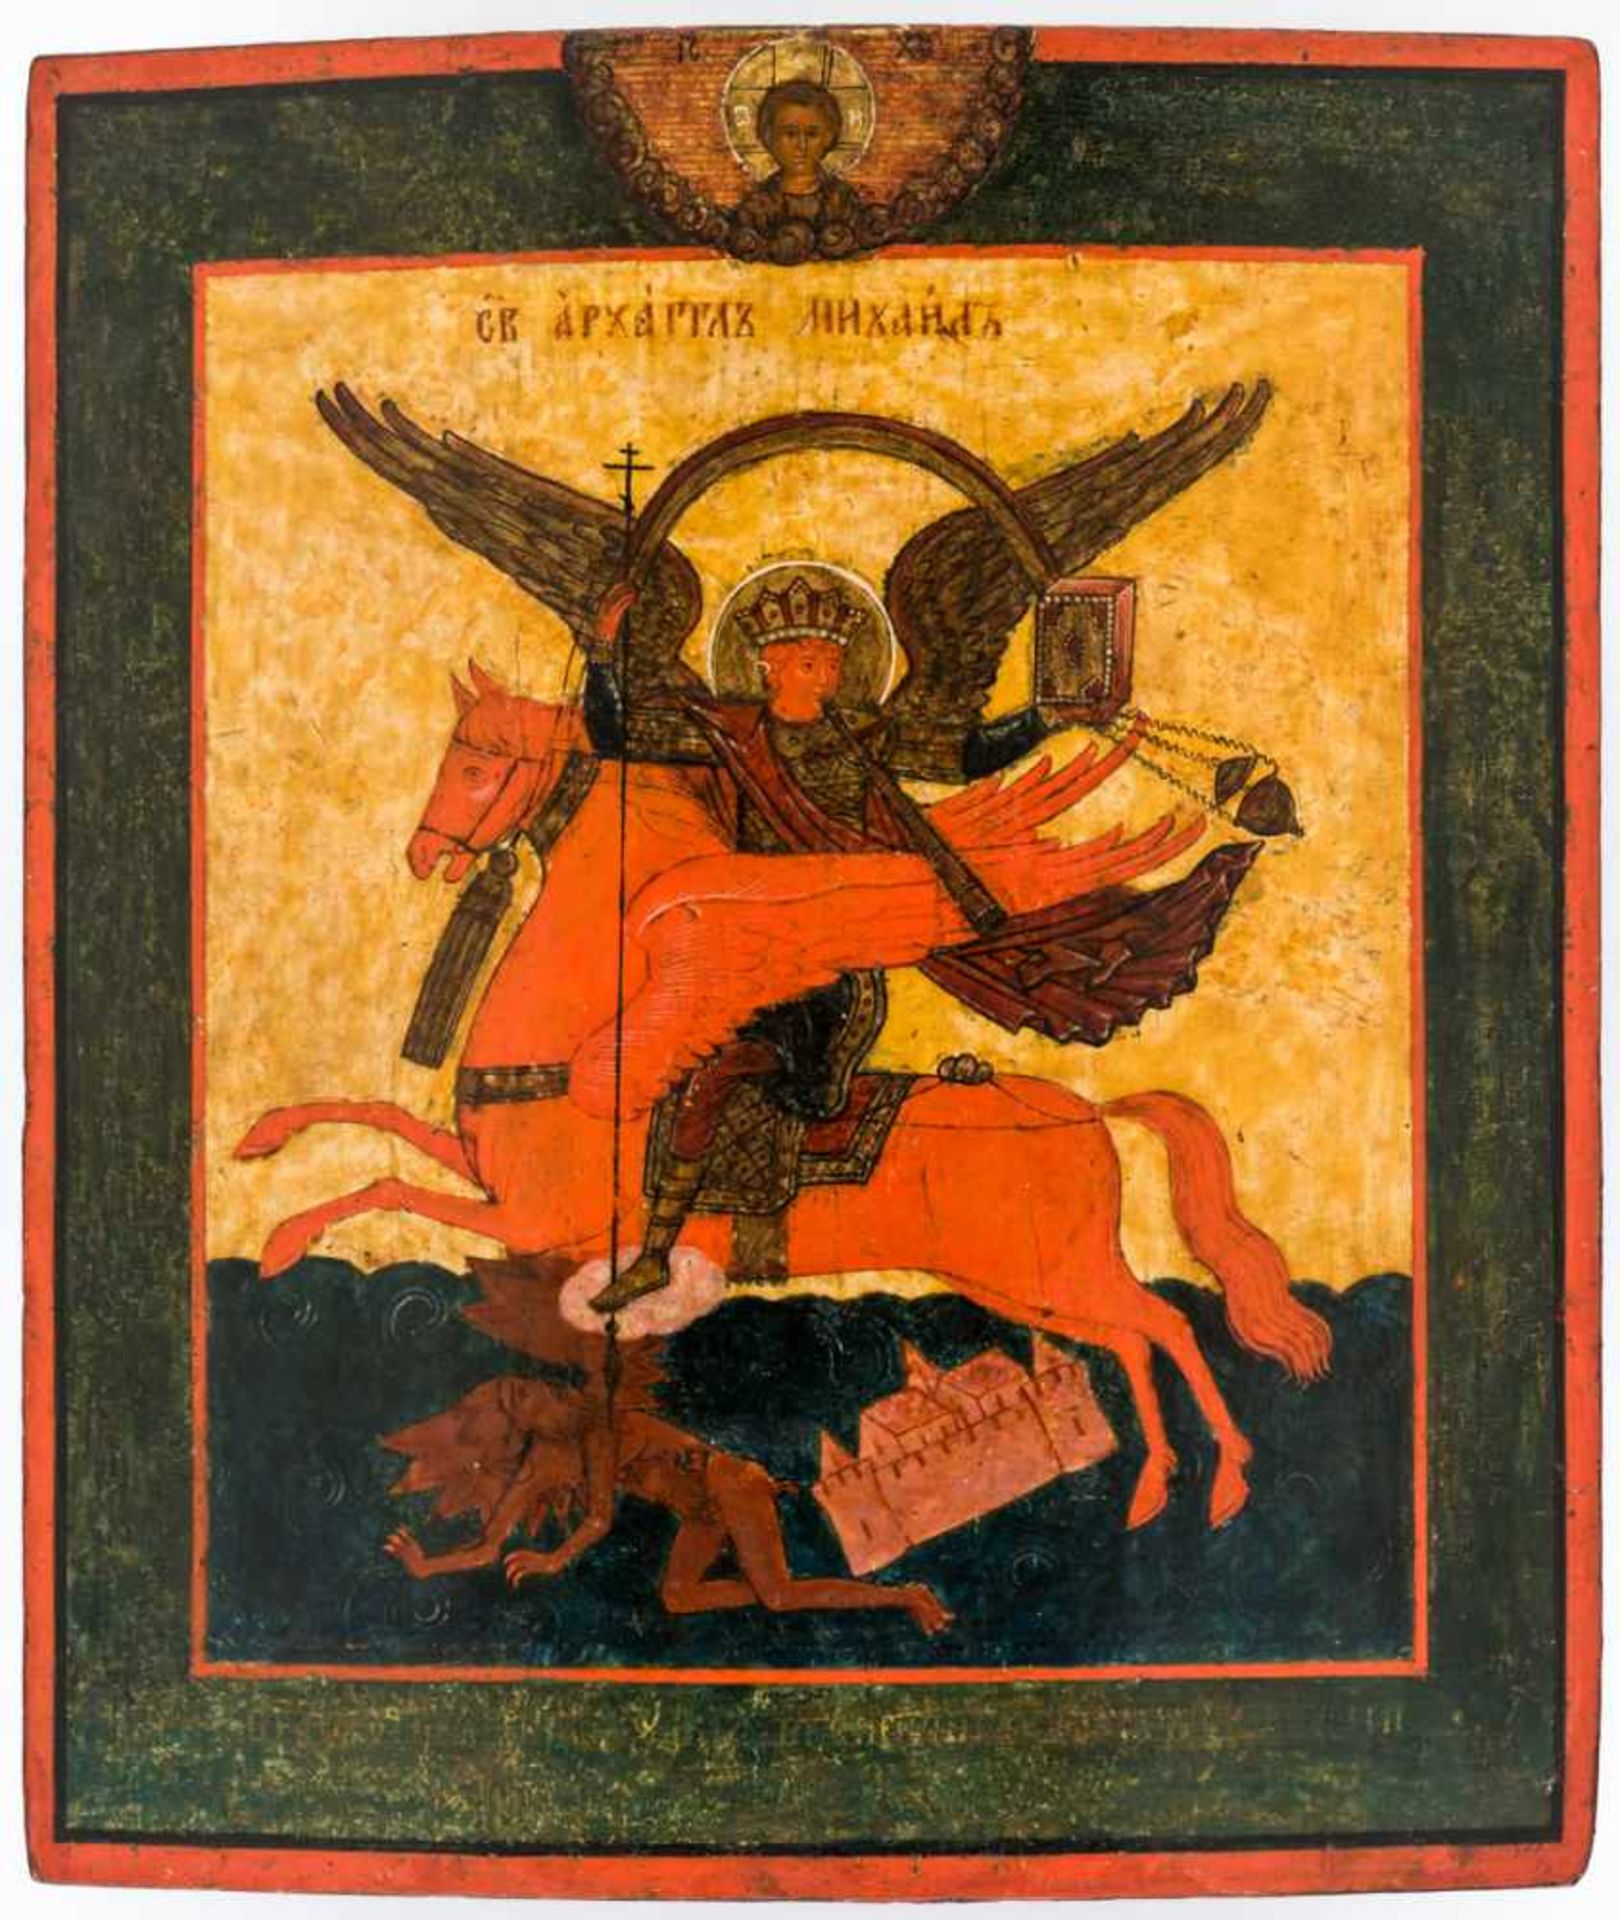 Erzengel Michael Russische Ikone, 18. Jh.33 x 29 cmProvenienz: Norddeutsche SammlungArchangel